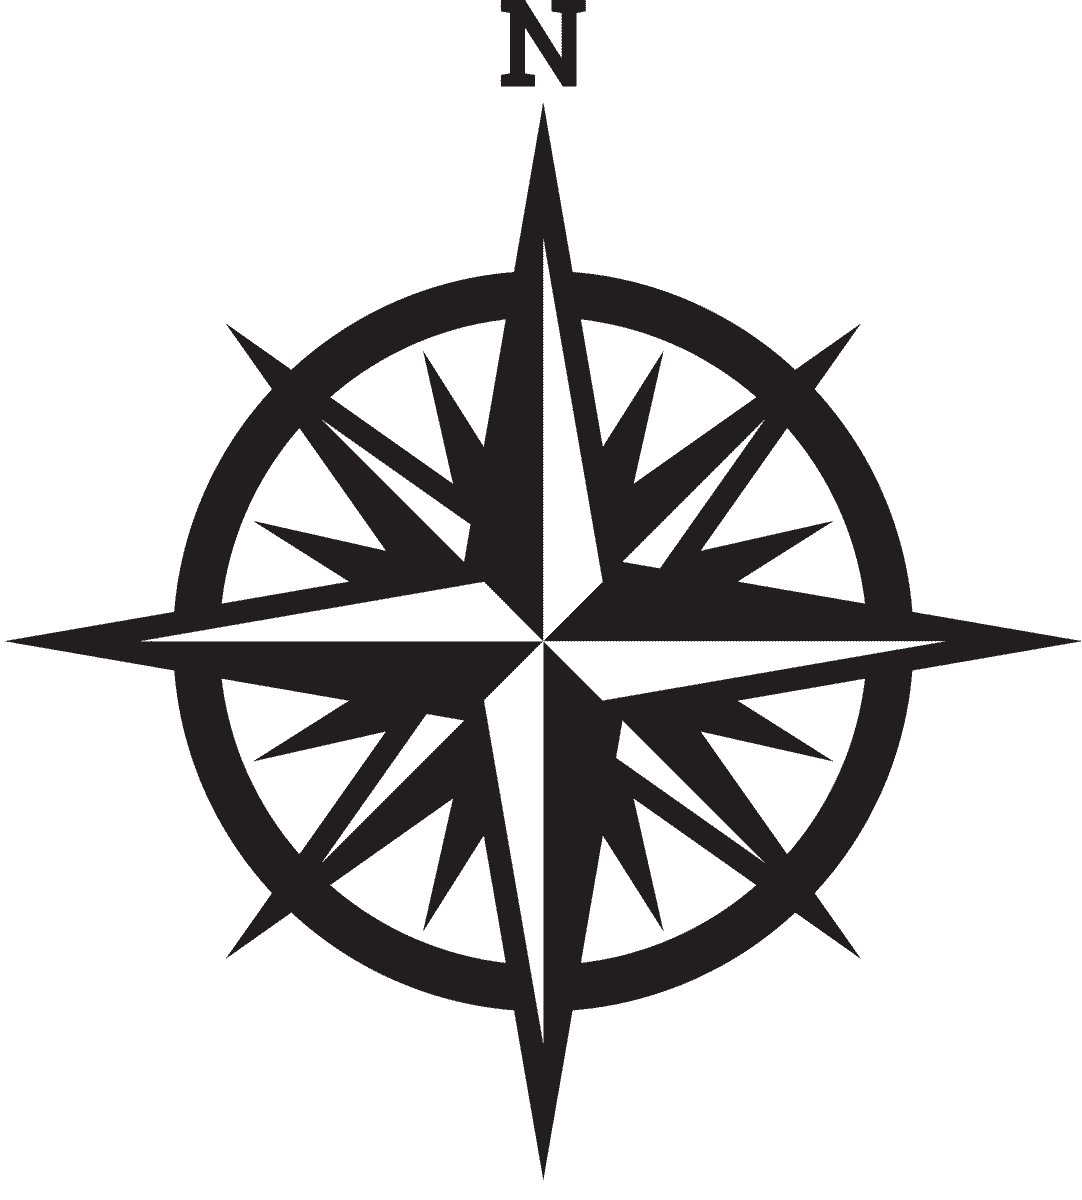 North Star Society logo